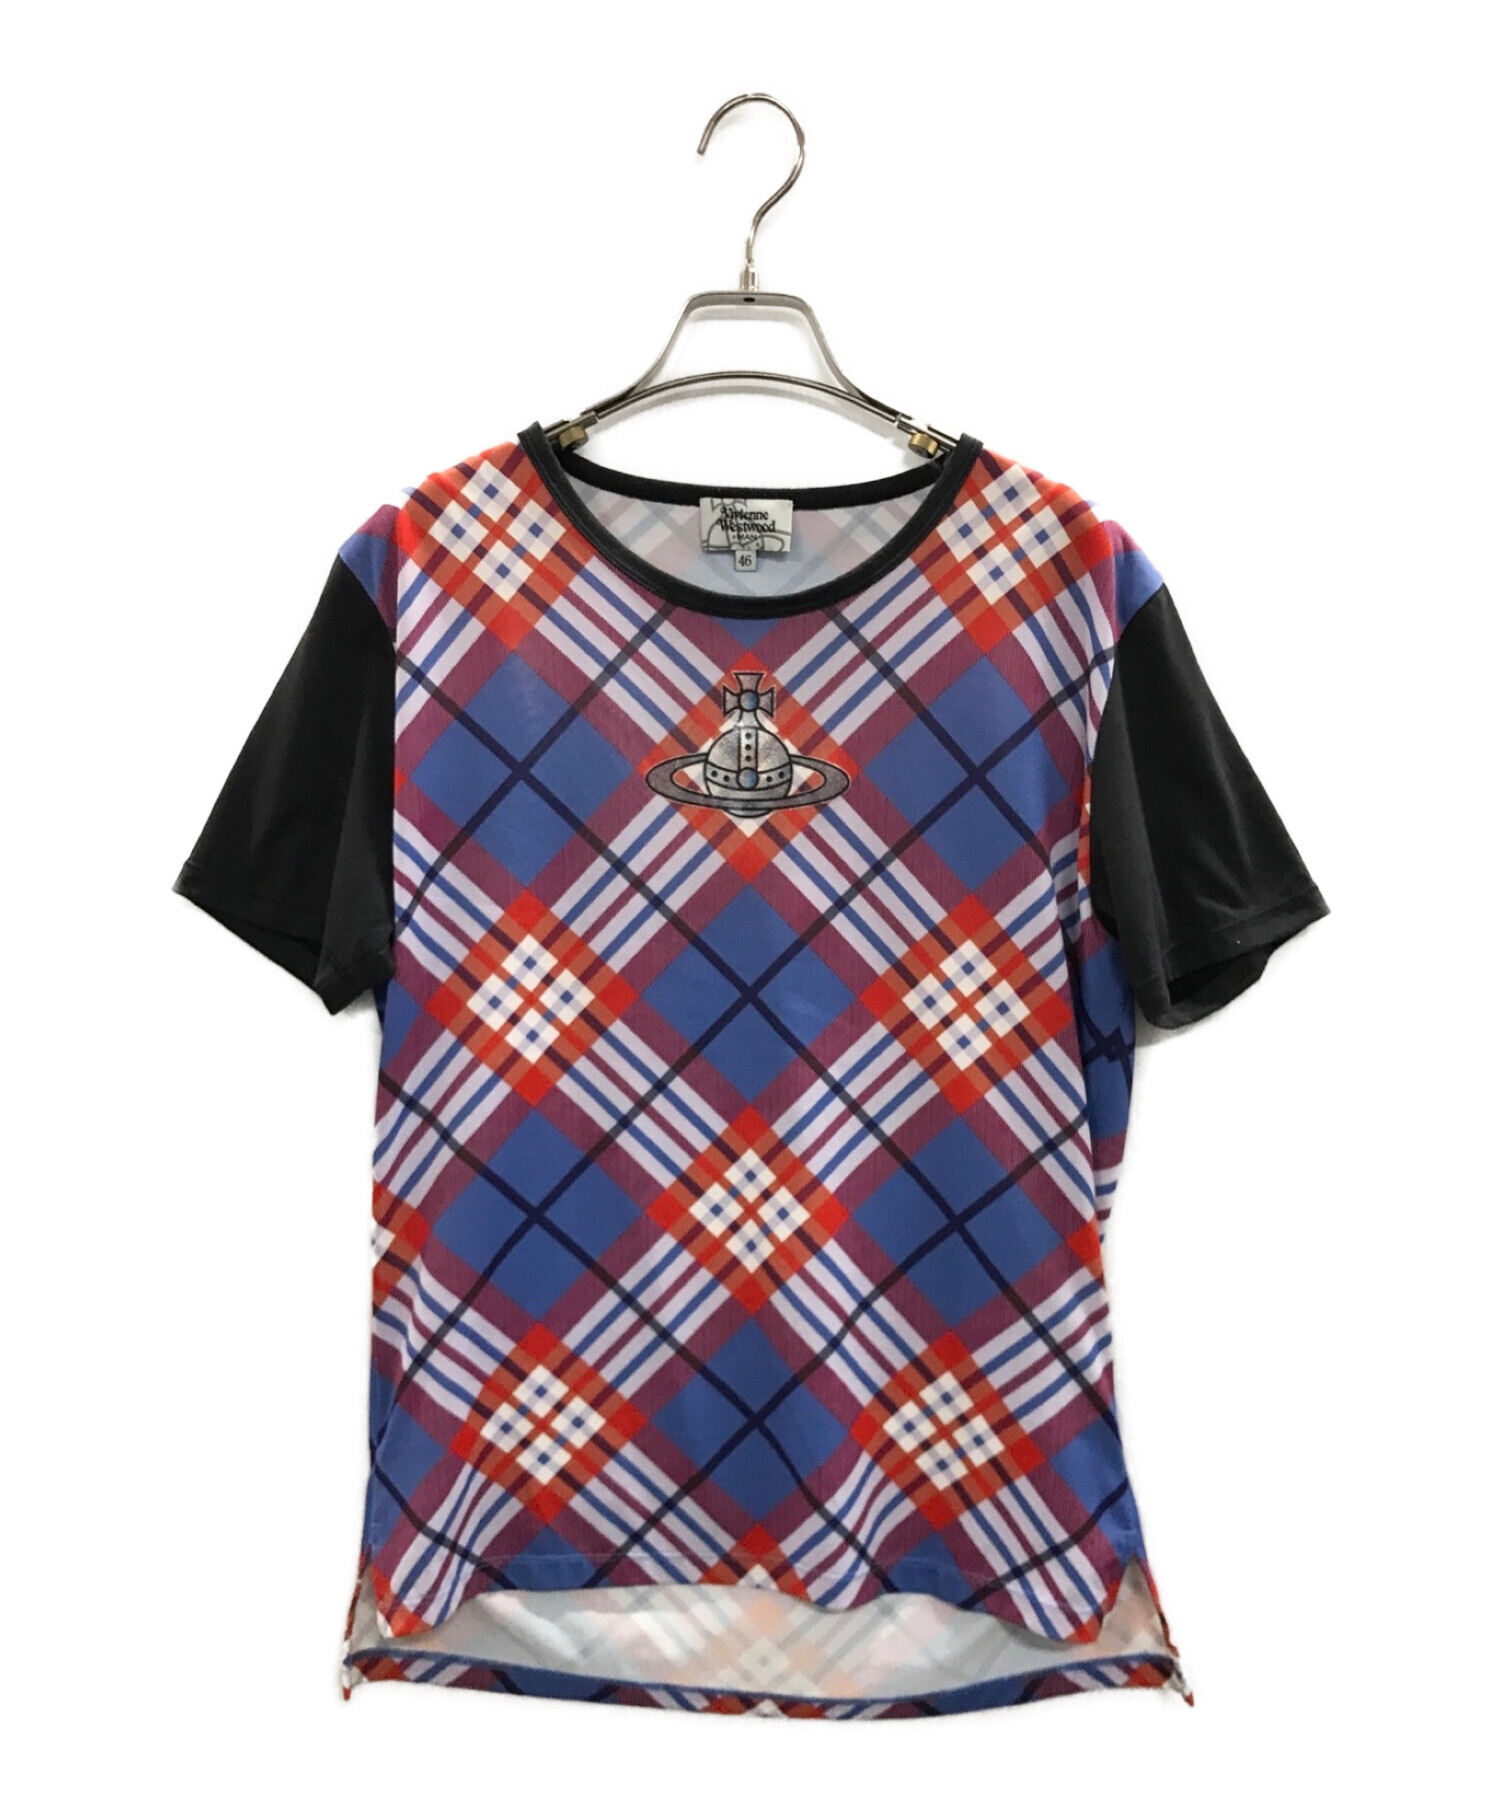 ViviennewestwoodMAN新品Tシャツ46